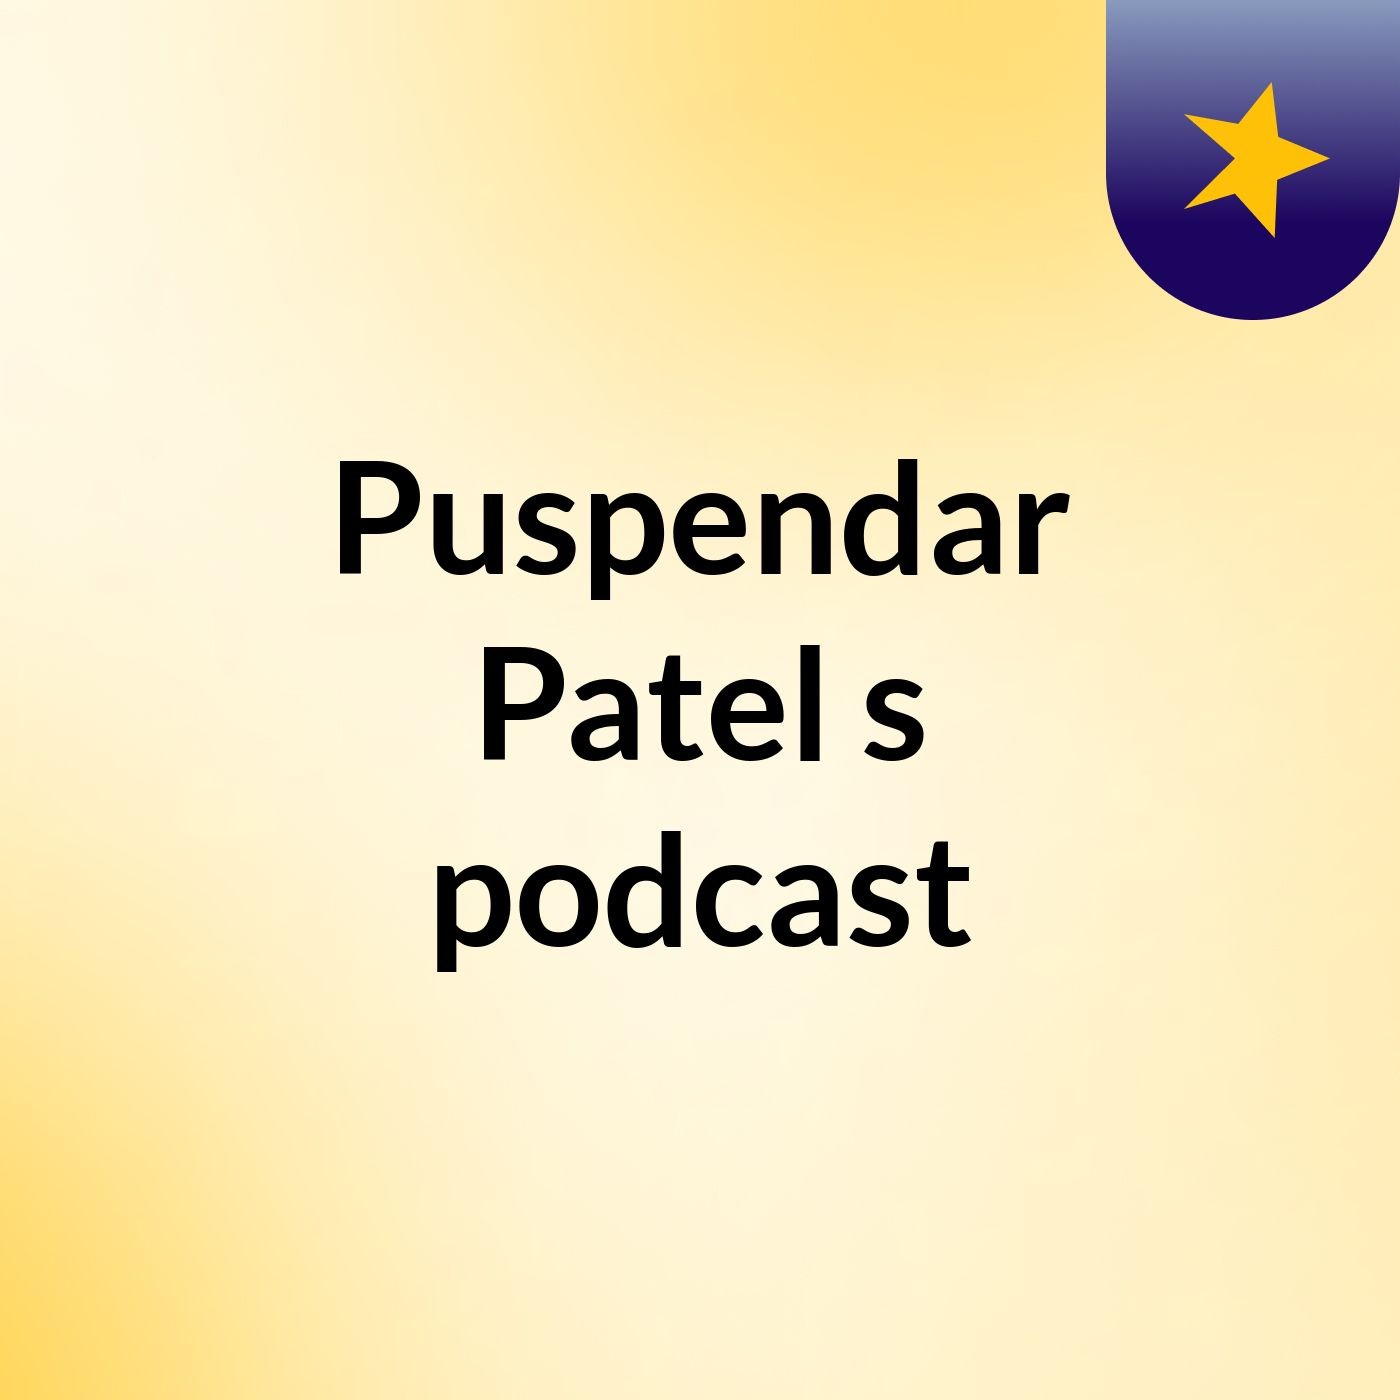 Puspendar Patel's podcast